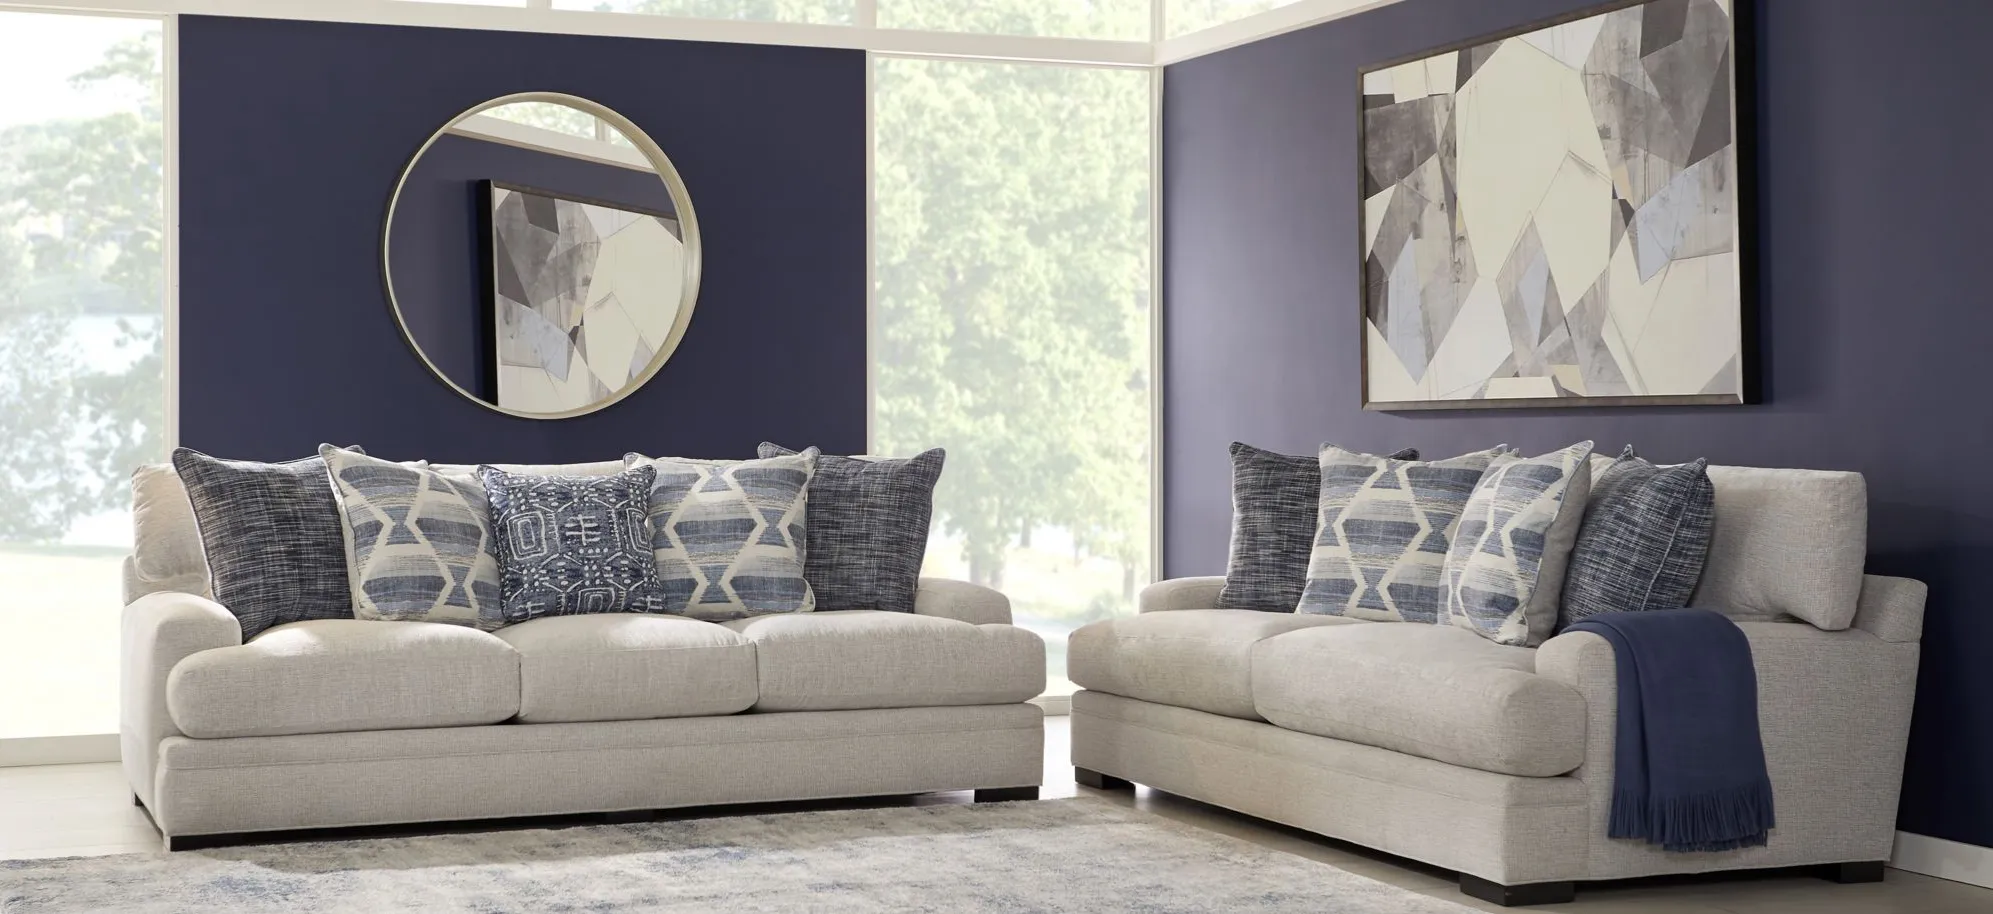 Bayside 2-pc. Living Room Set in Braxton Ceramic by H.M. Richards